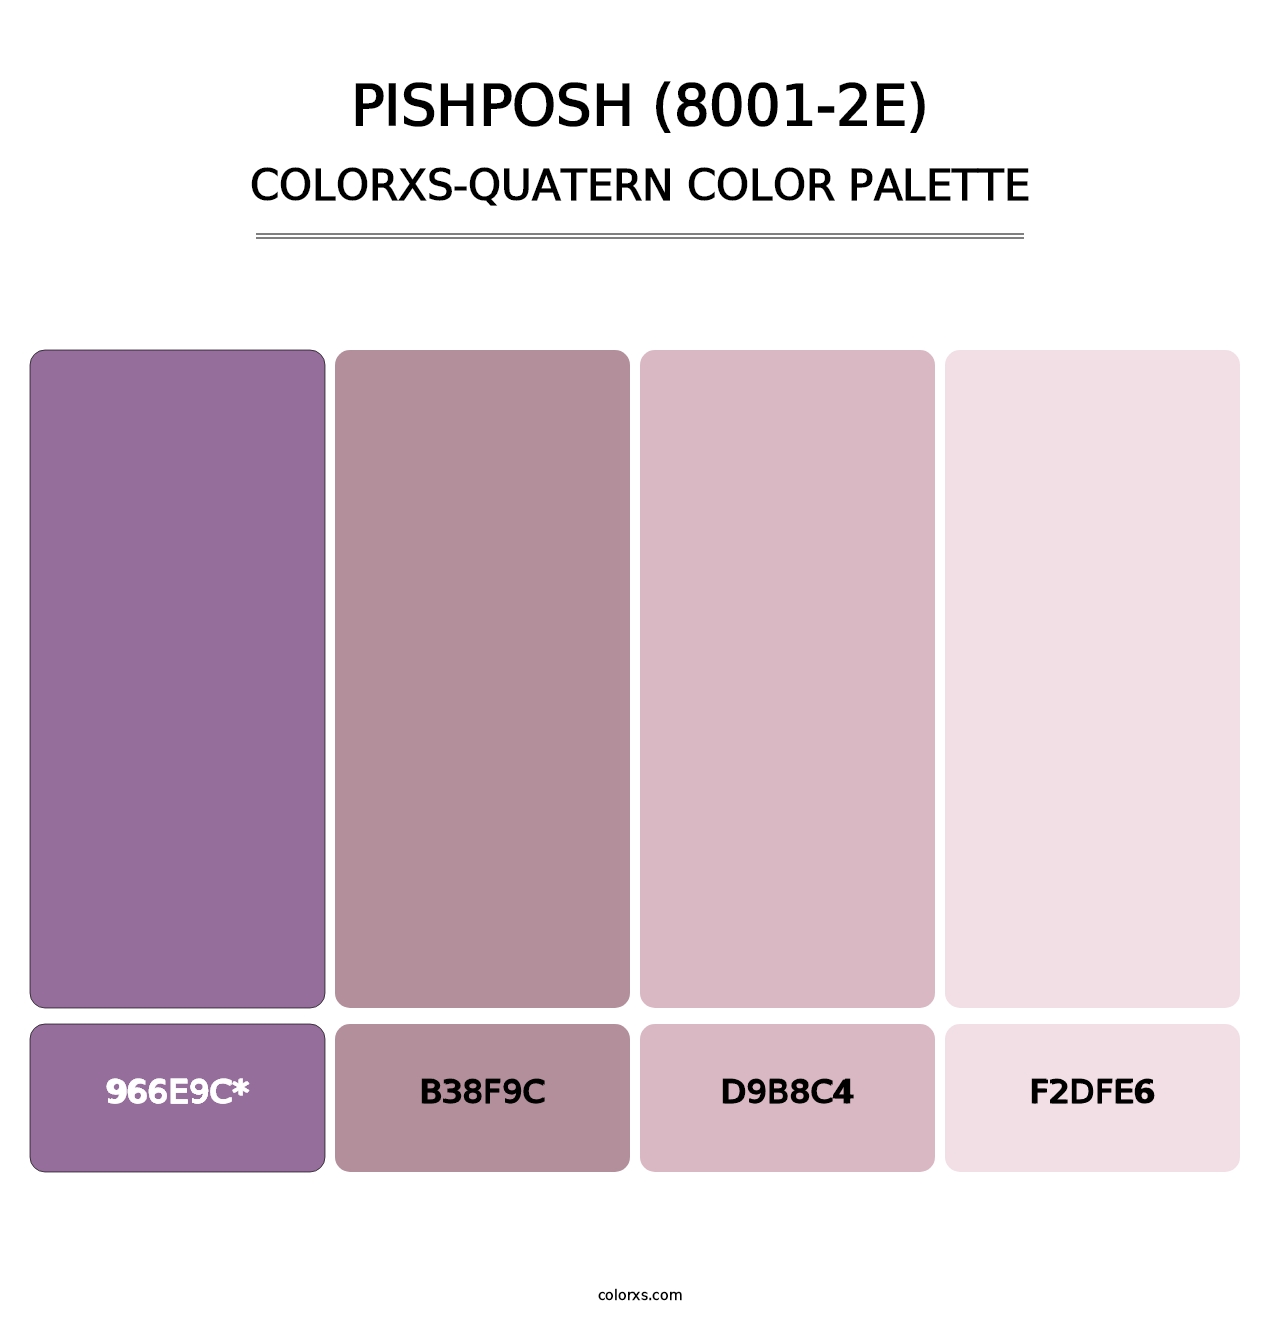 Pishposh (8001-2E) - Colorxs Quatern Palette